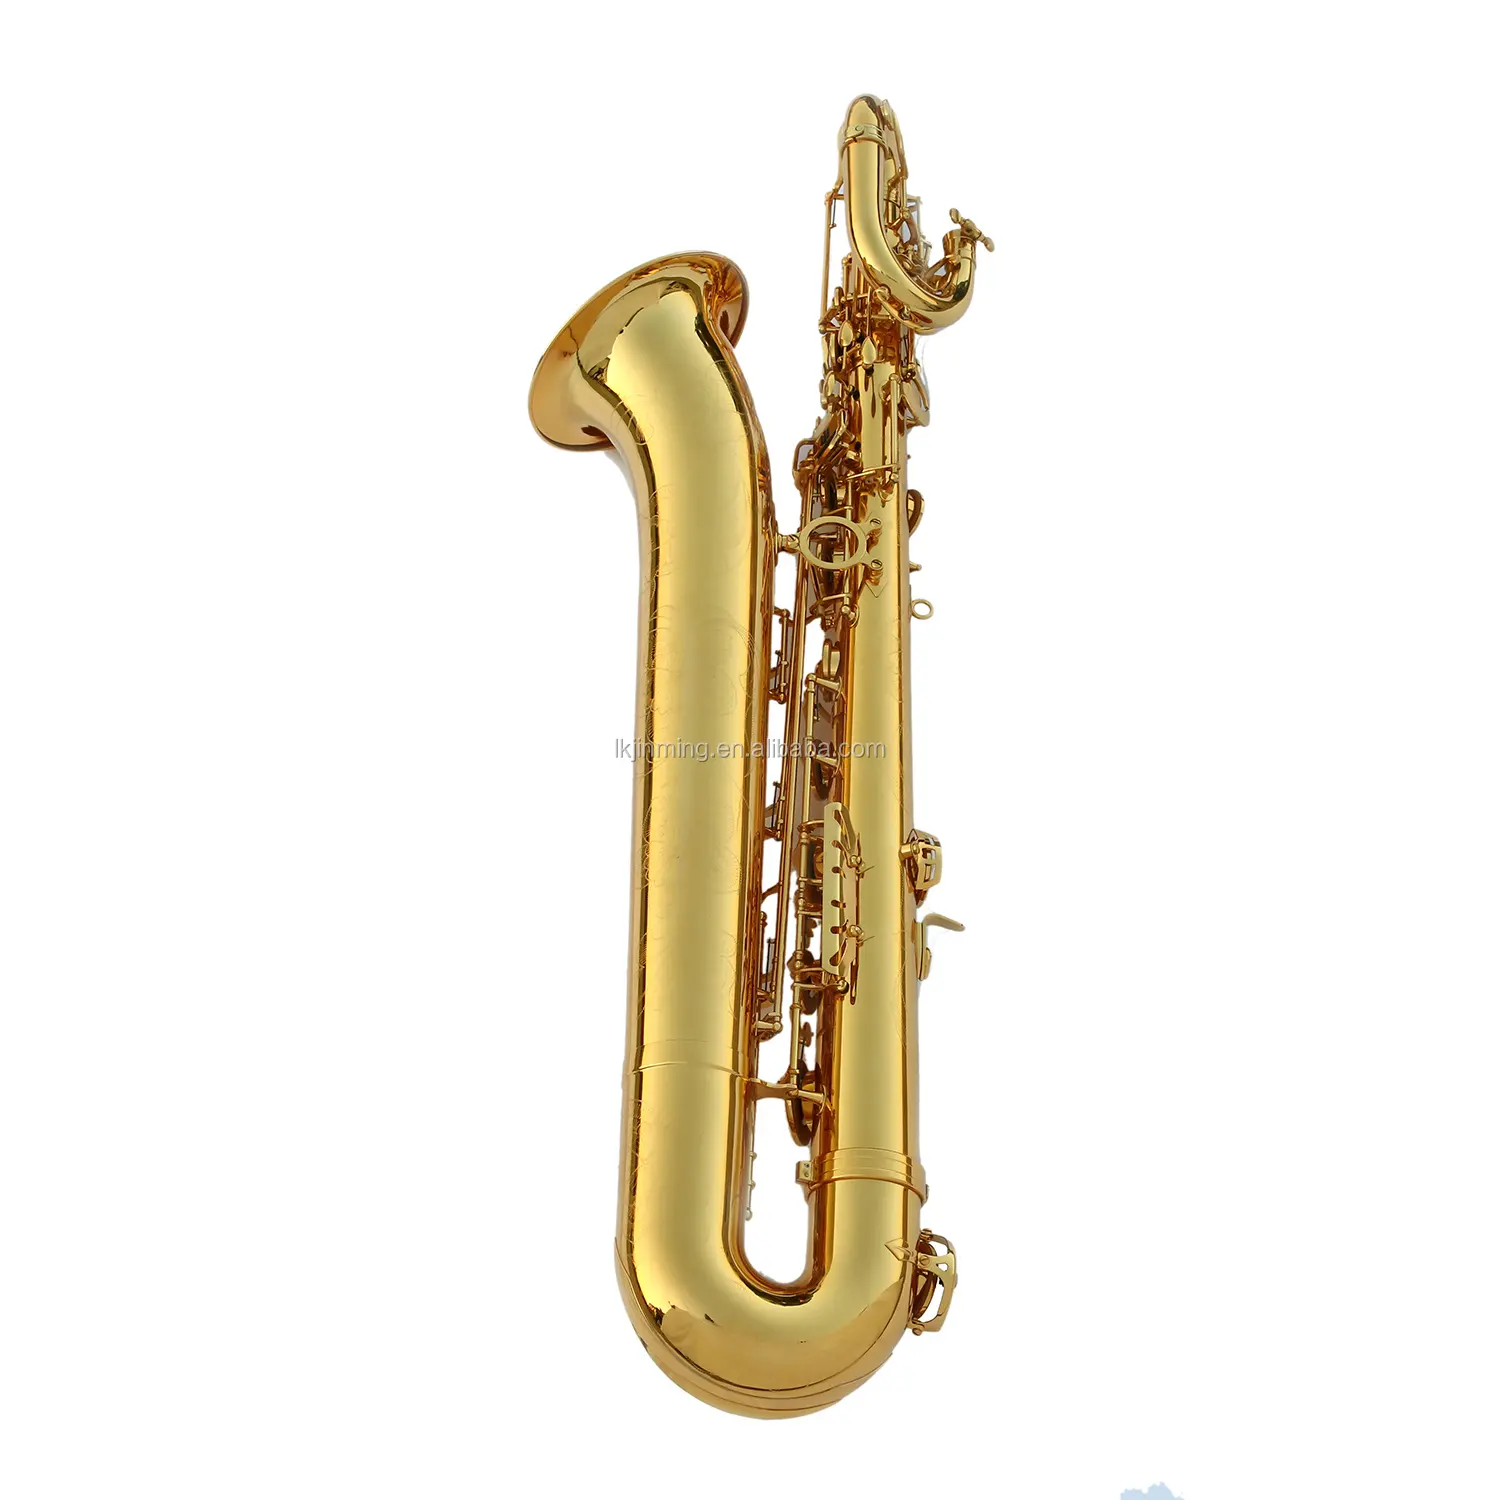 Produsen Menjual Saksofon Bariton Profesional untuk Performa Konser